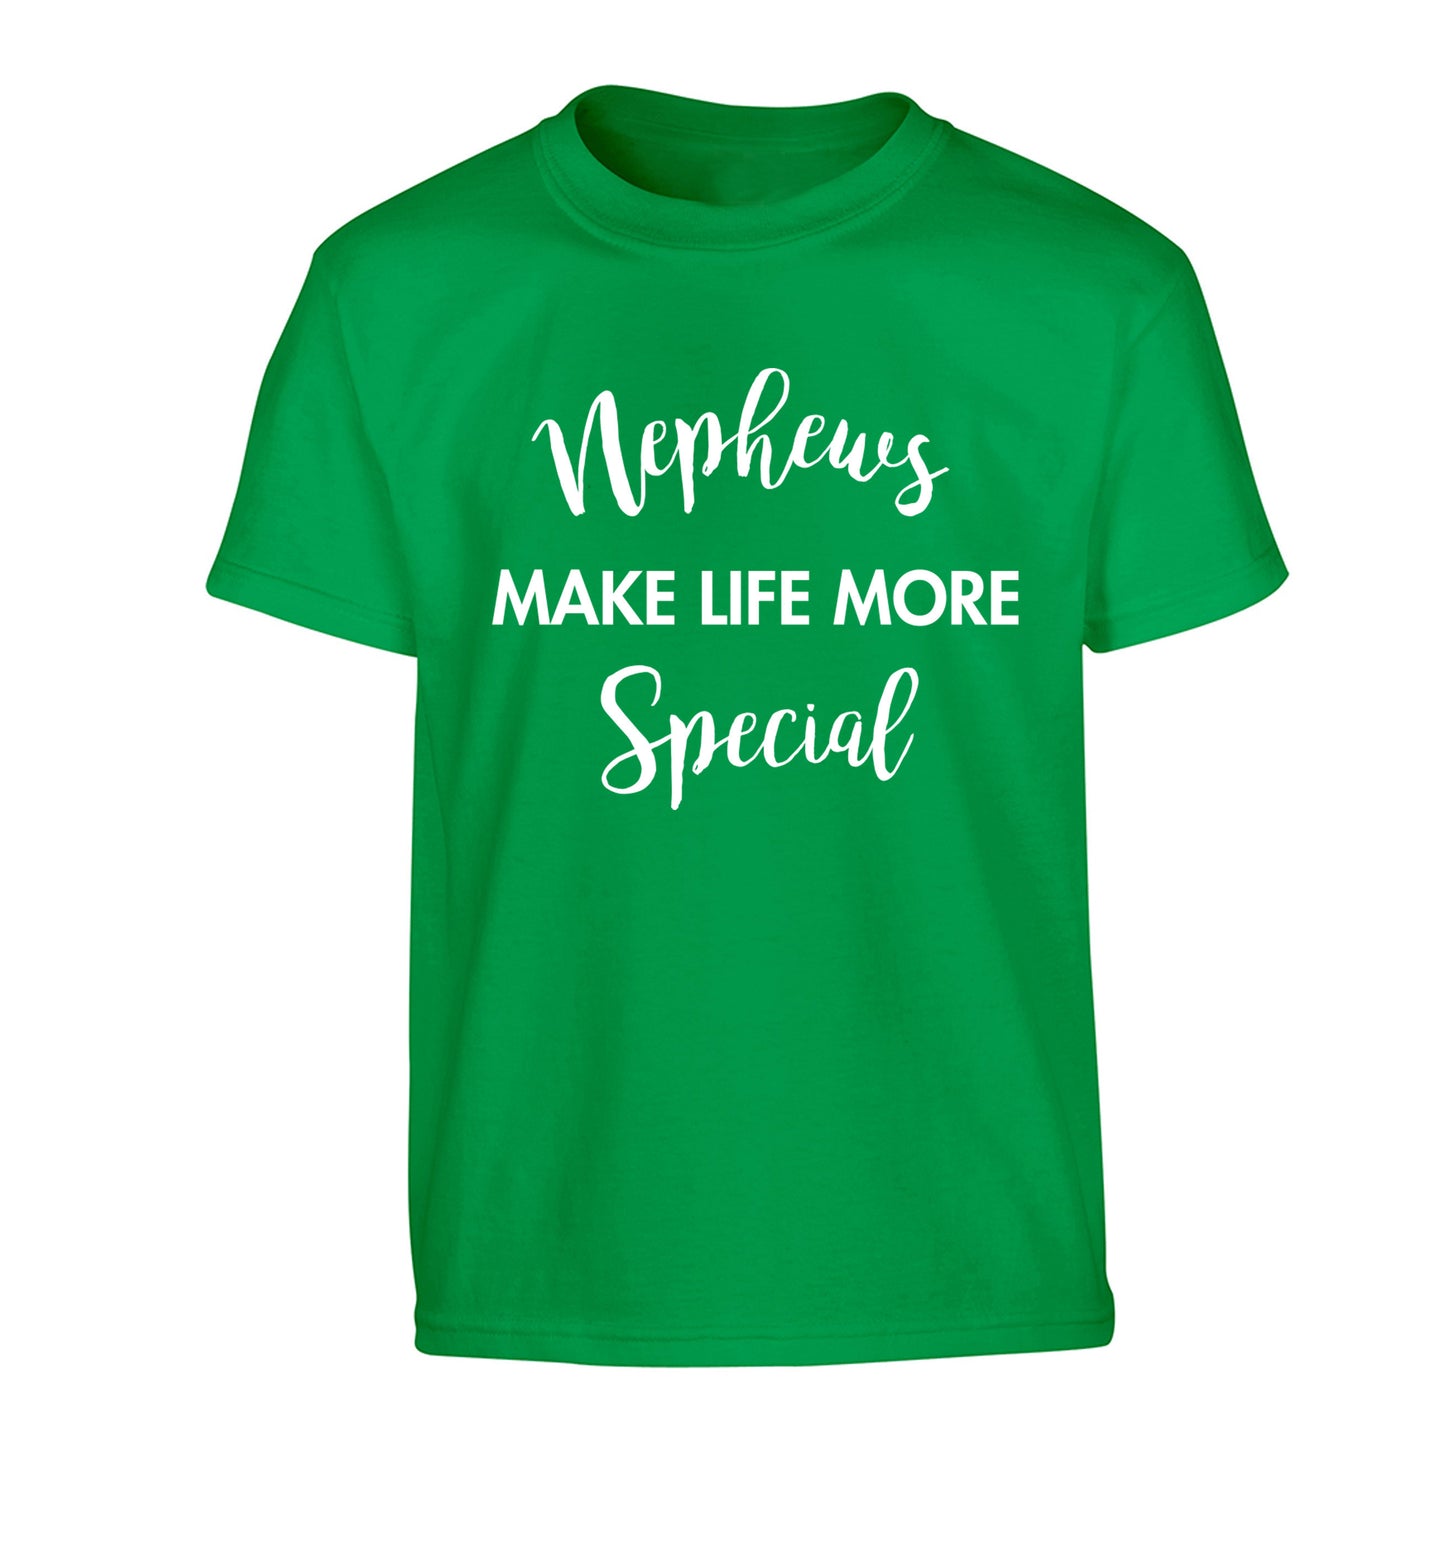 Nephews make life more special Children's green Tshirt 12-14 Years